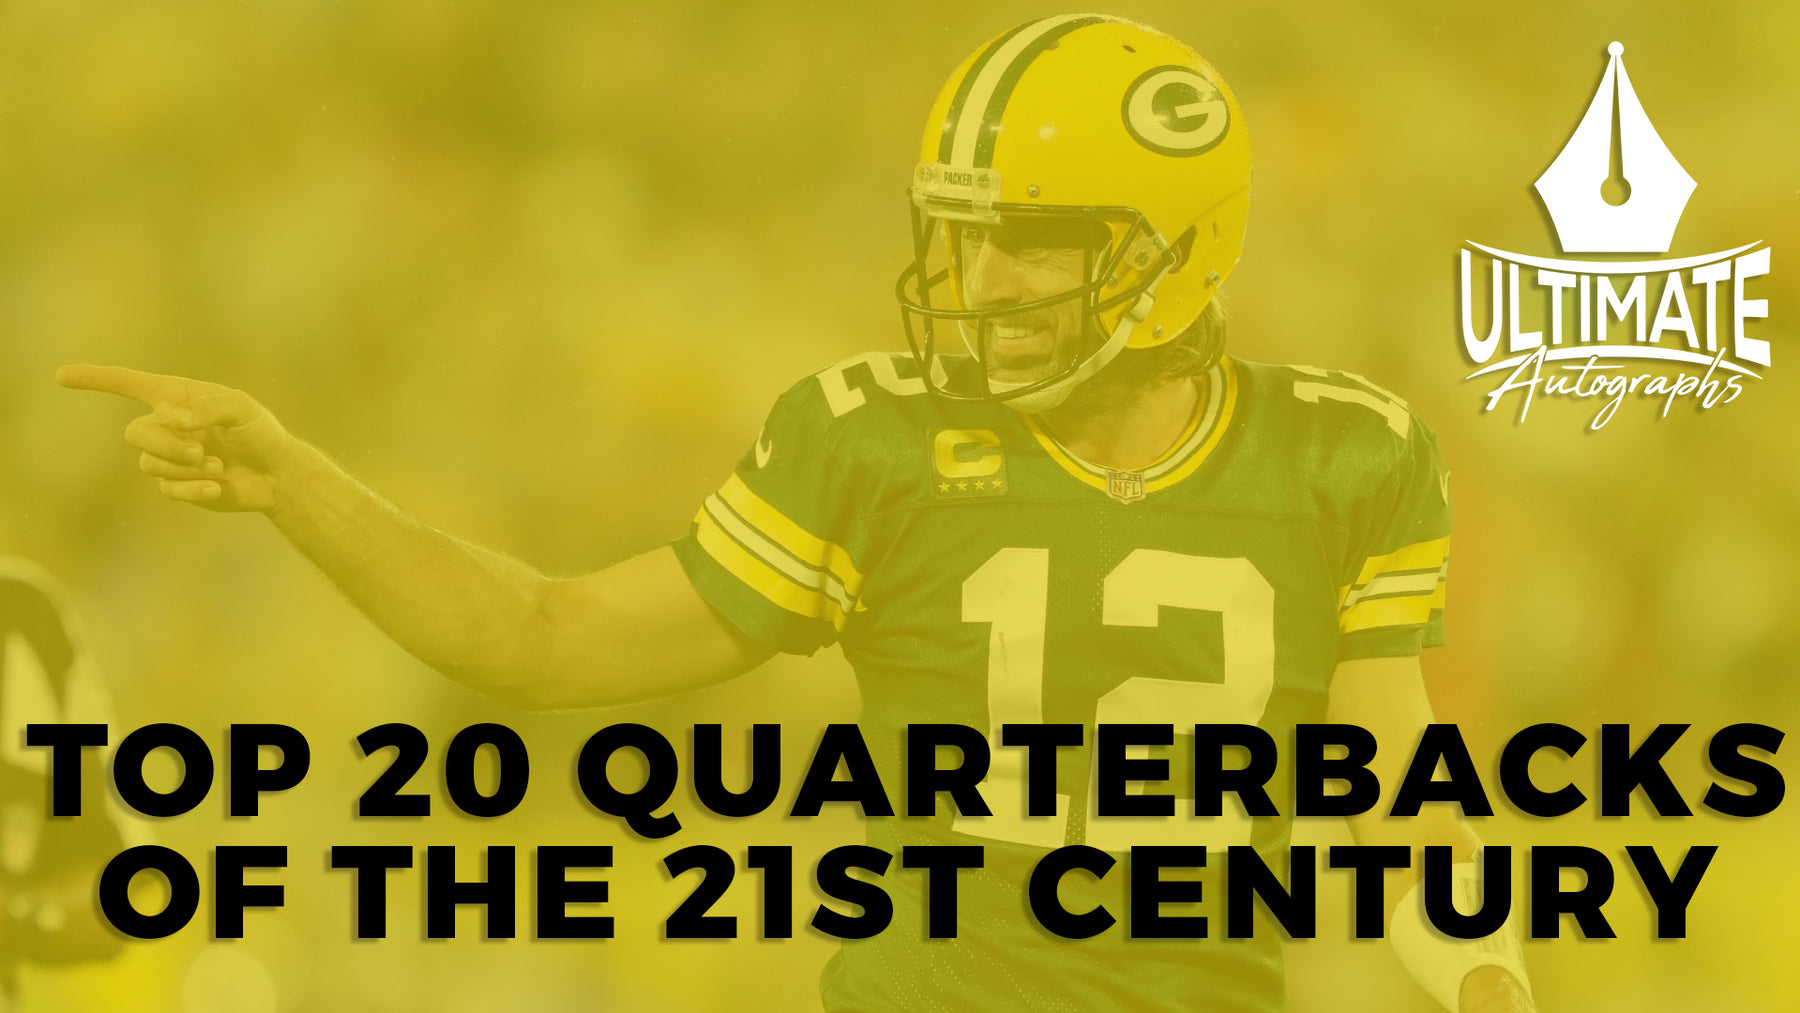 Top 20 Quarterbacks of the 21st Century: 11-20